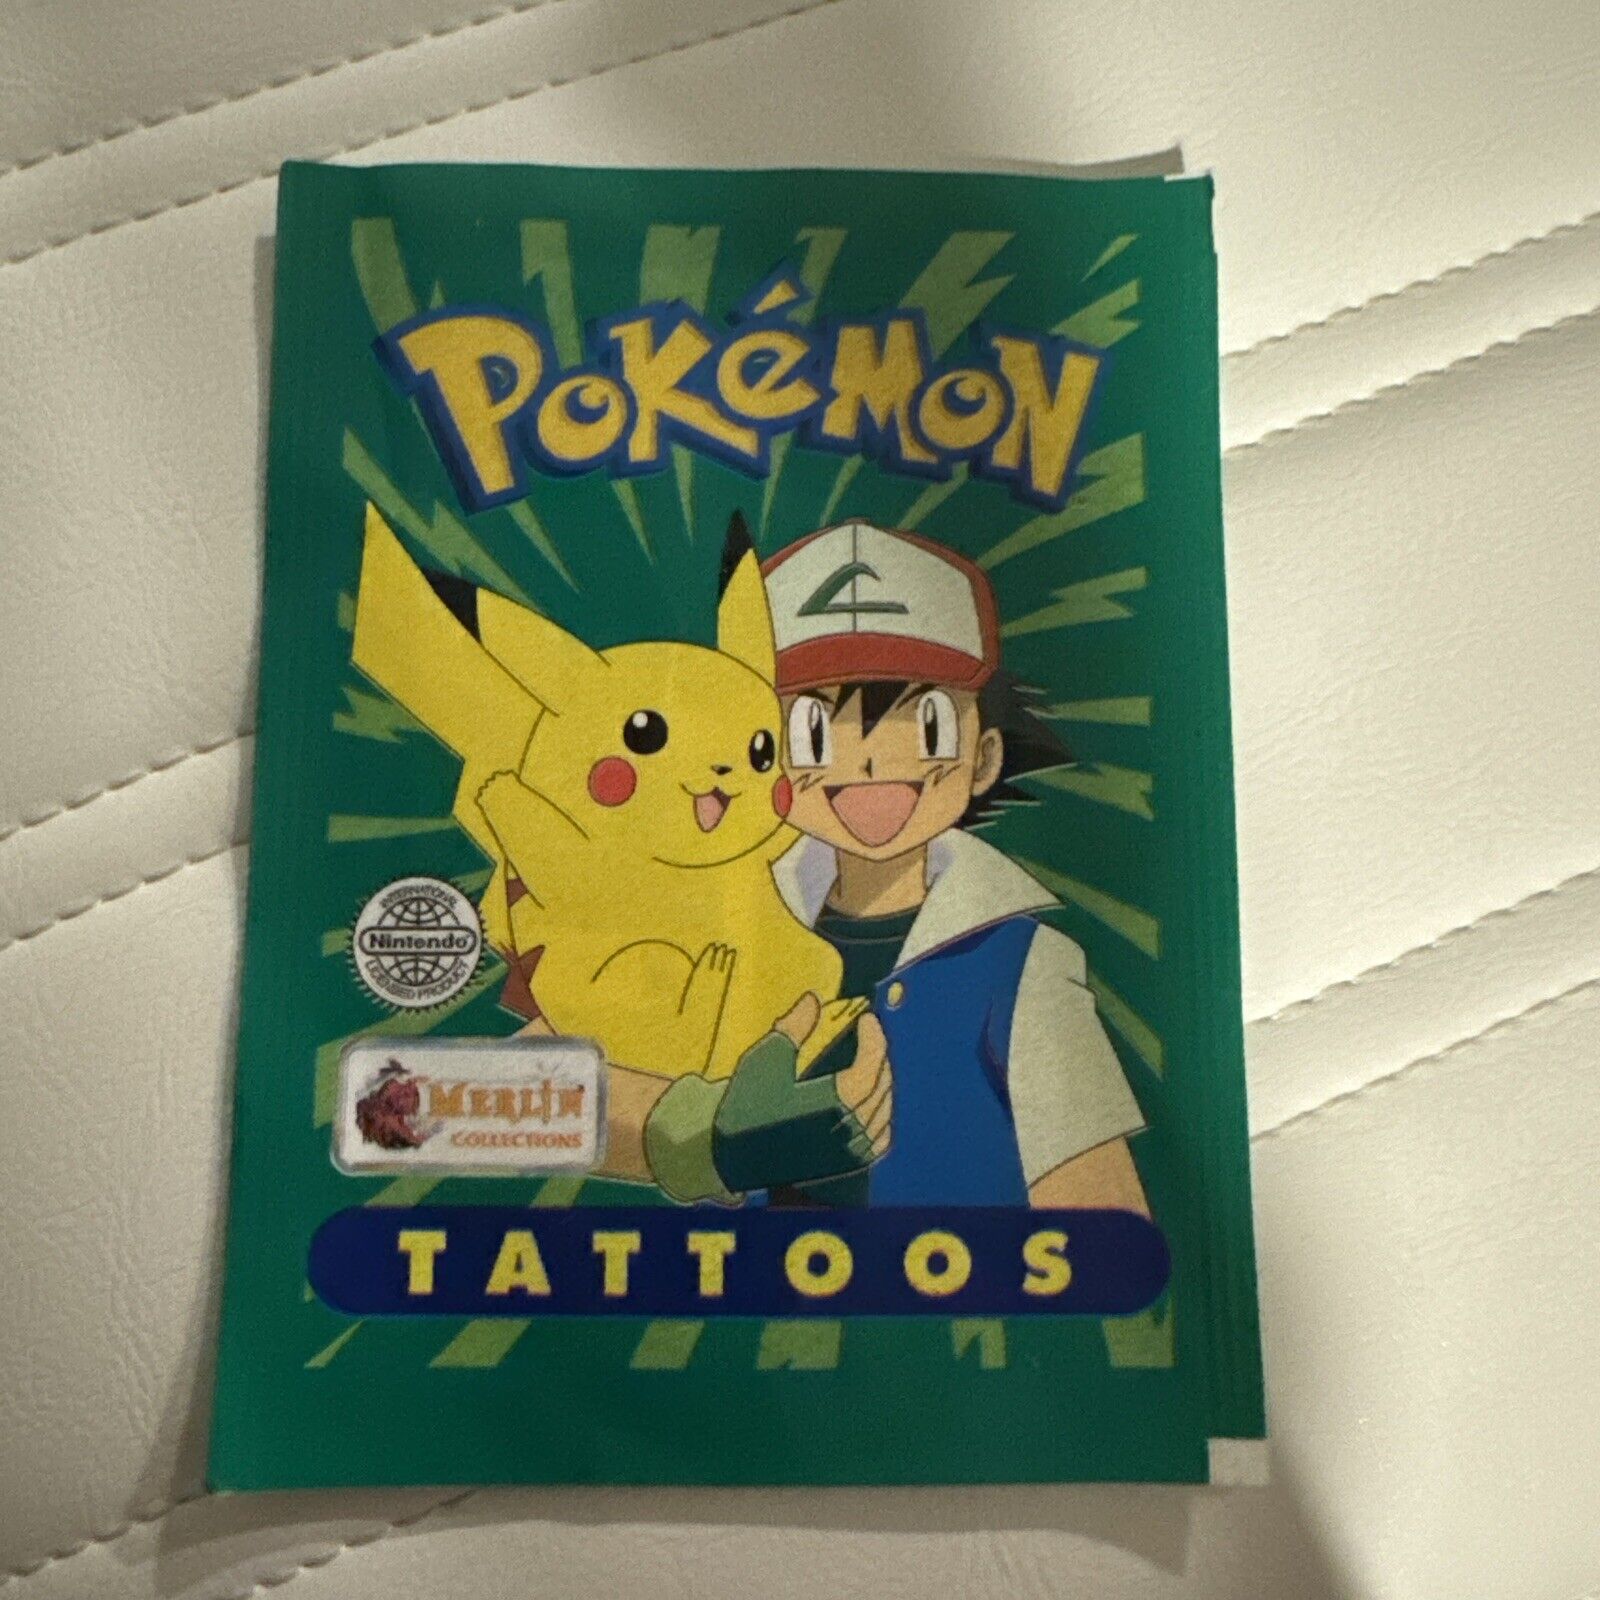 pokémon topps tattoo pack